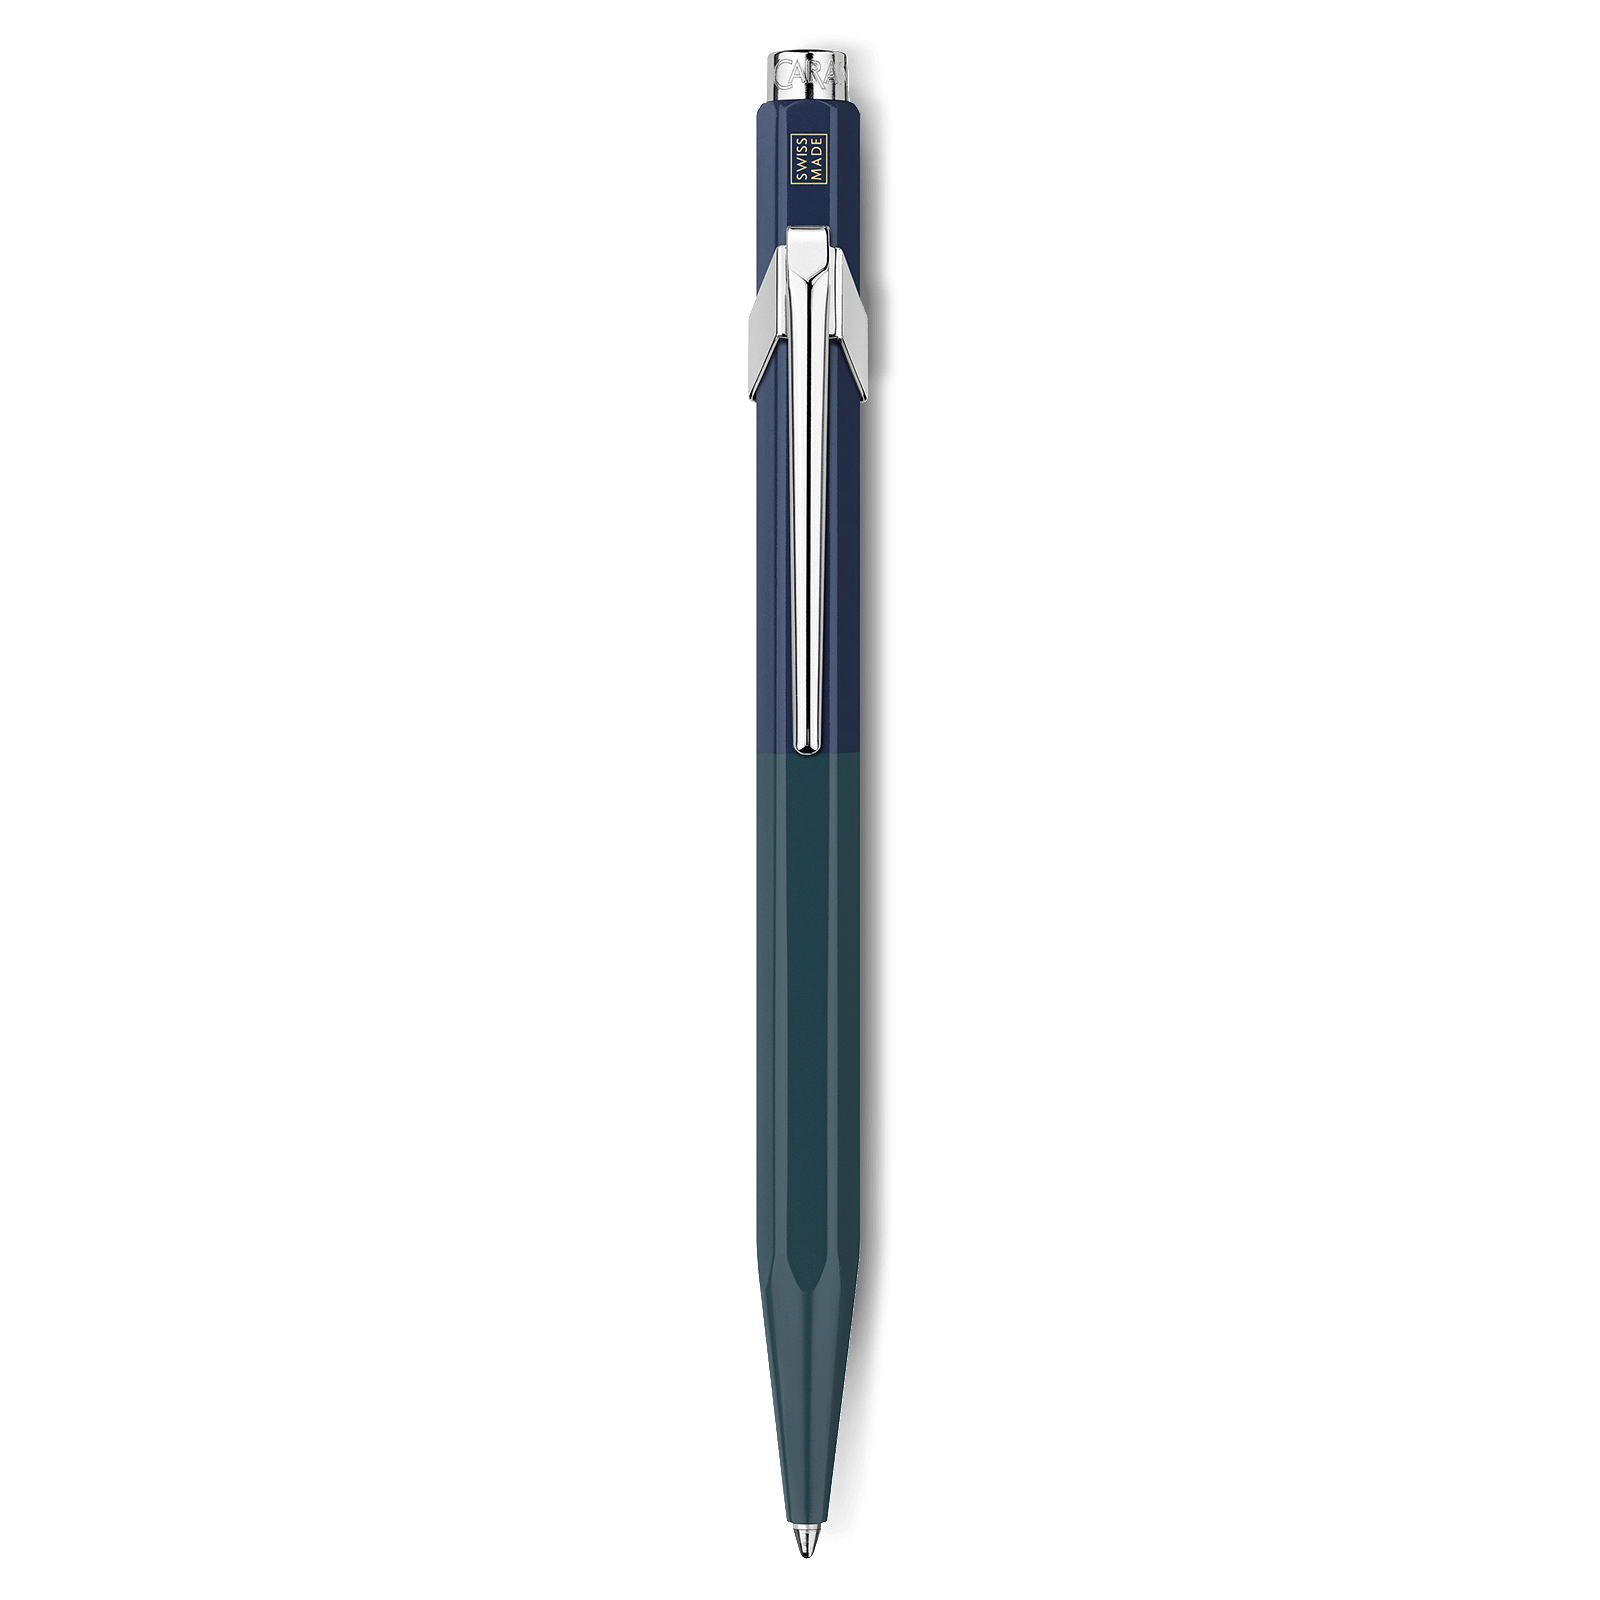 Caran D'Ache + Paul Smith Edition 4 849 Limited Edition Racing Green Navy Ballpoint Pen - Pencraft the boutique